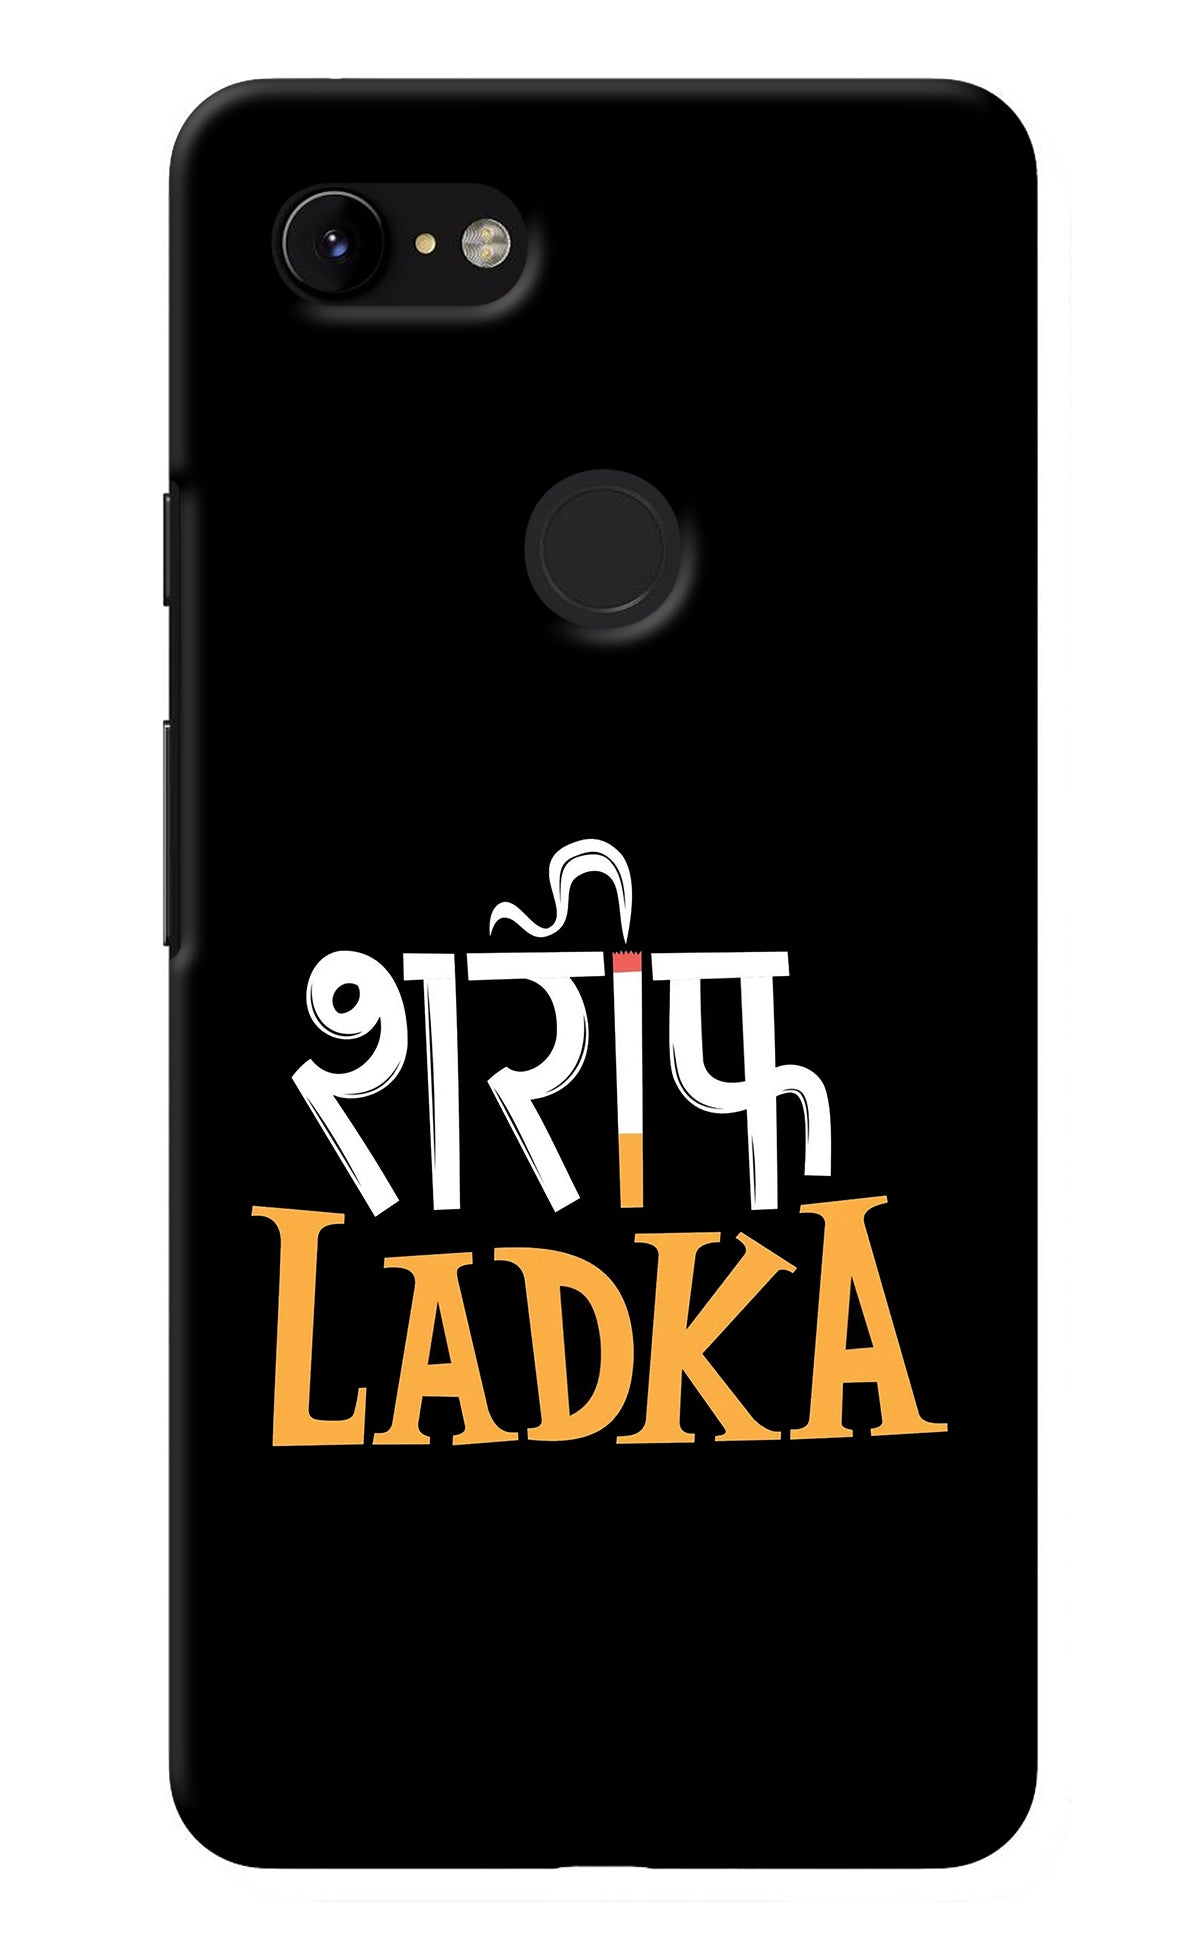 Shareef Ladka Google Pixel 3 XL Back Cover